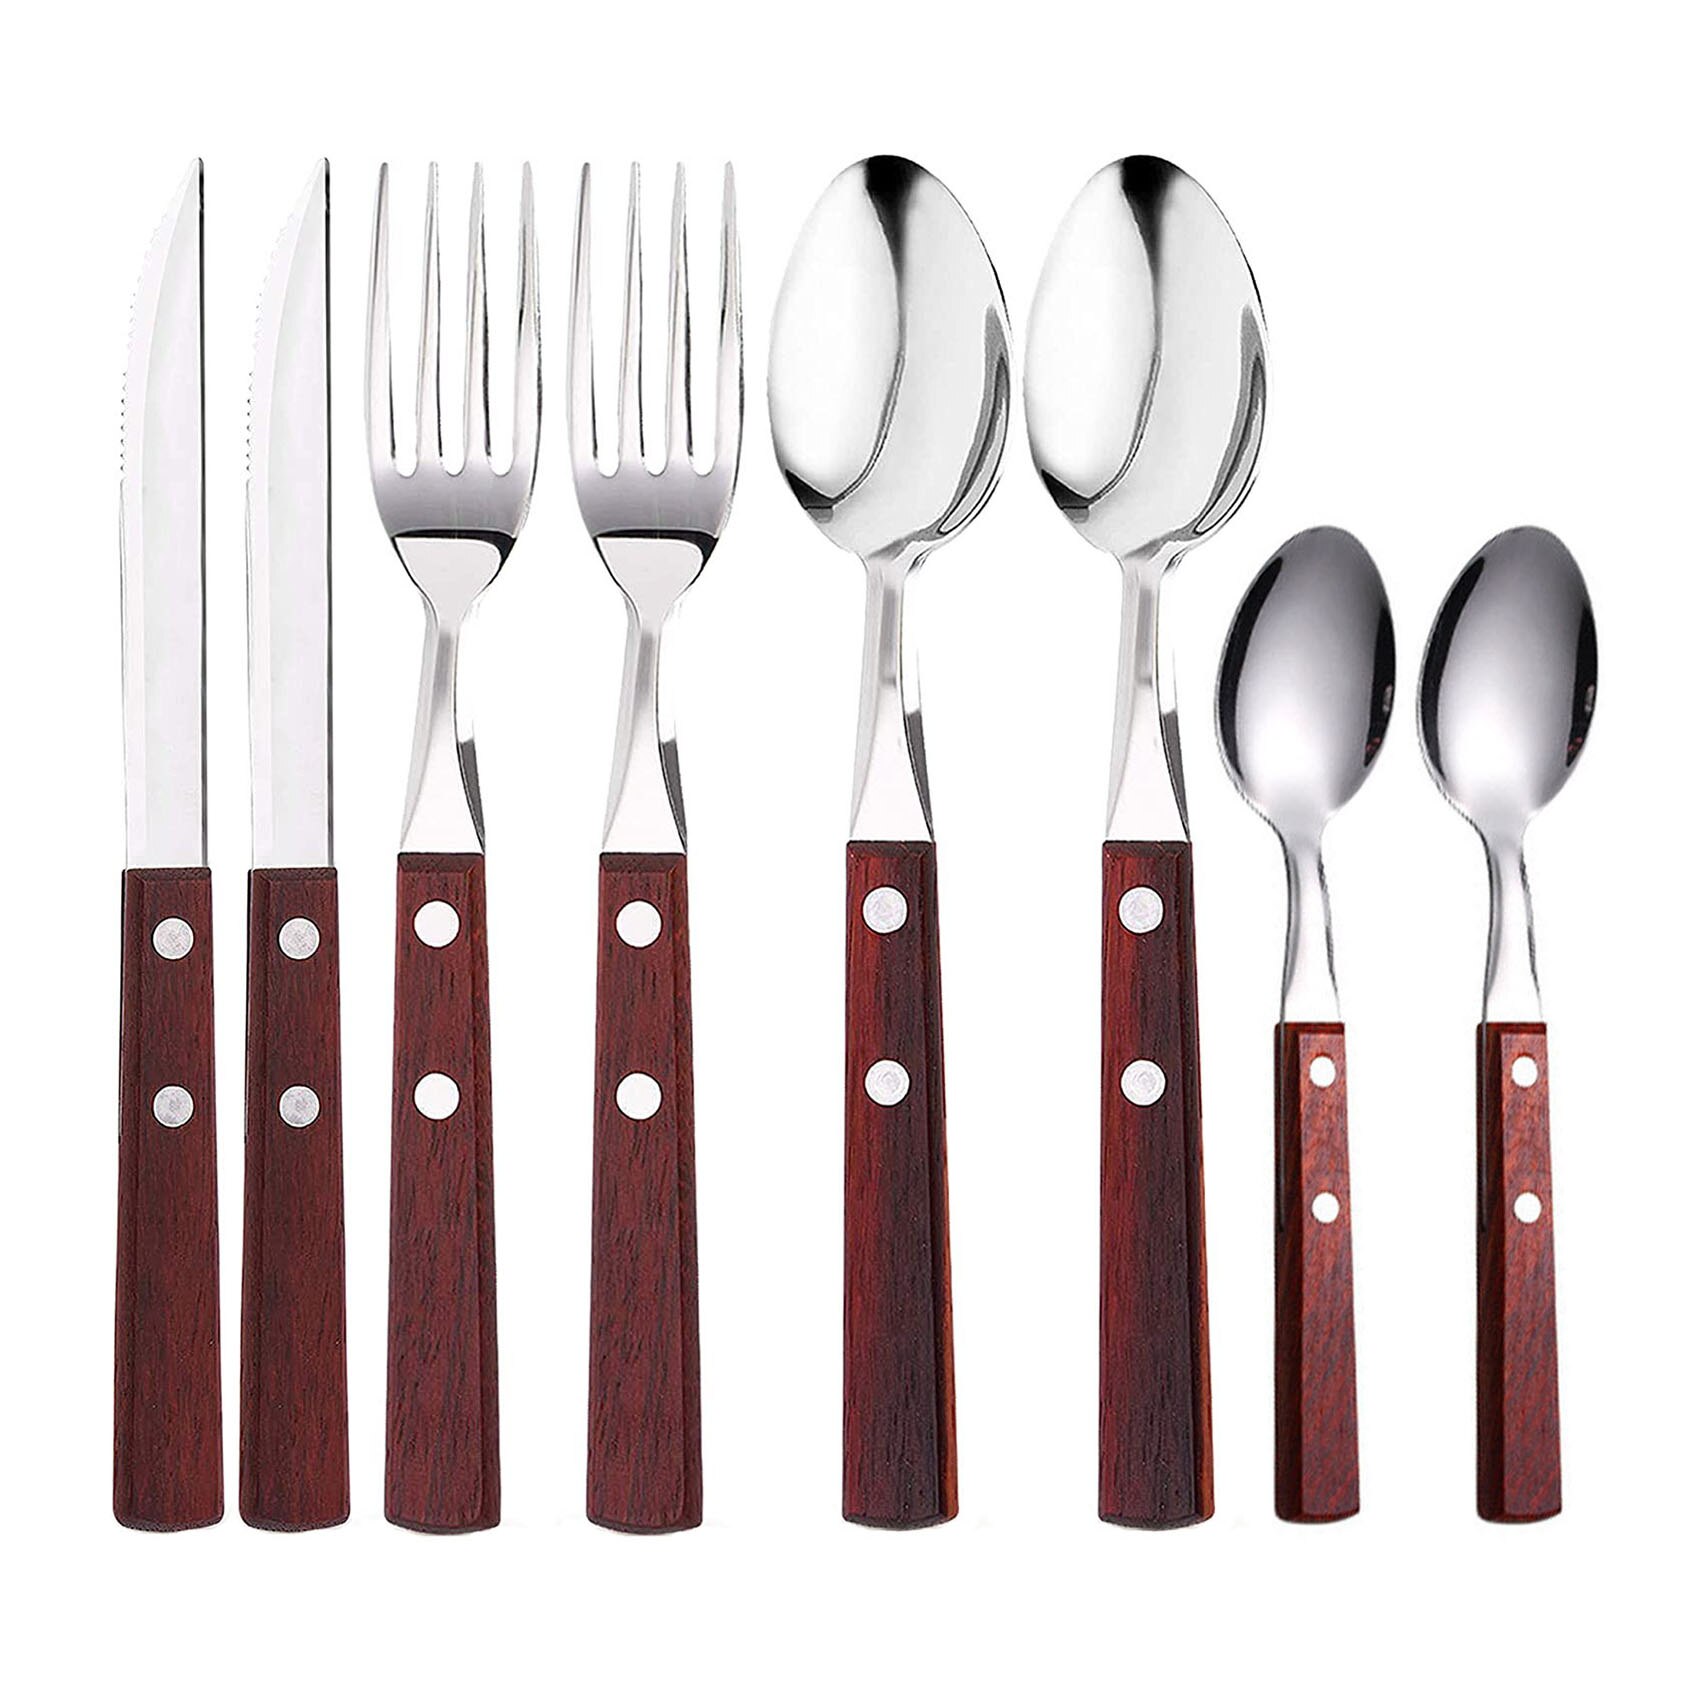 Wooden-Handle Cutlery Set - Unique Restaurant Supplies